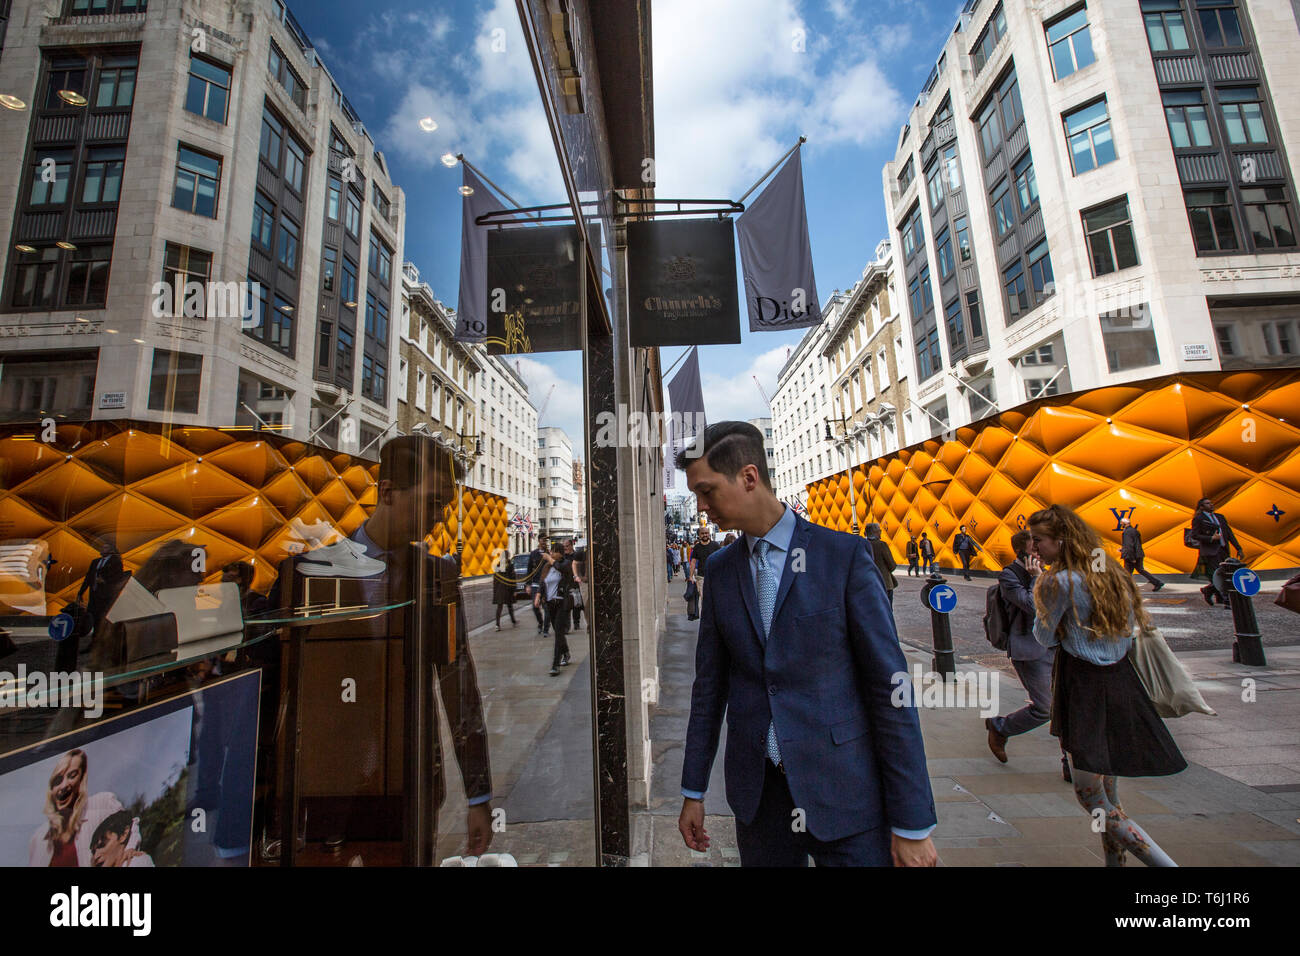 New Bond Street, luxury shopping street in central London, England, United Kingdom Stock Photo